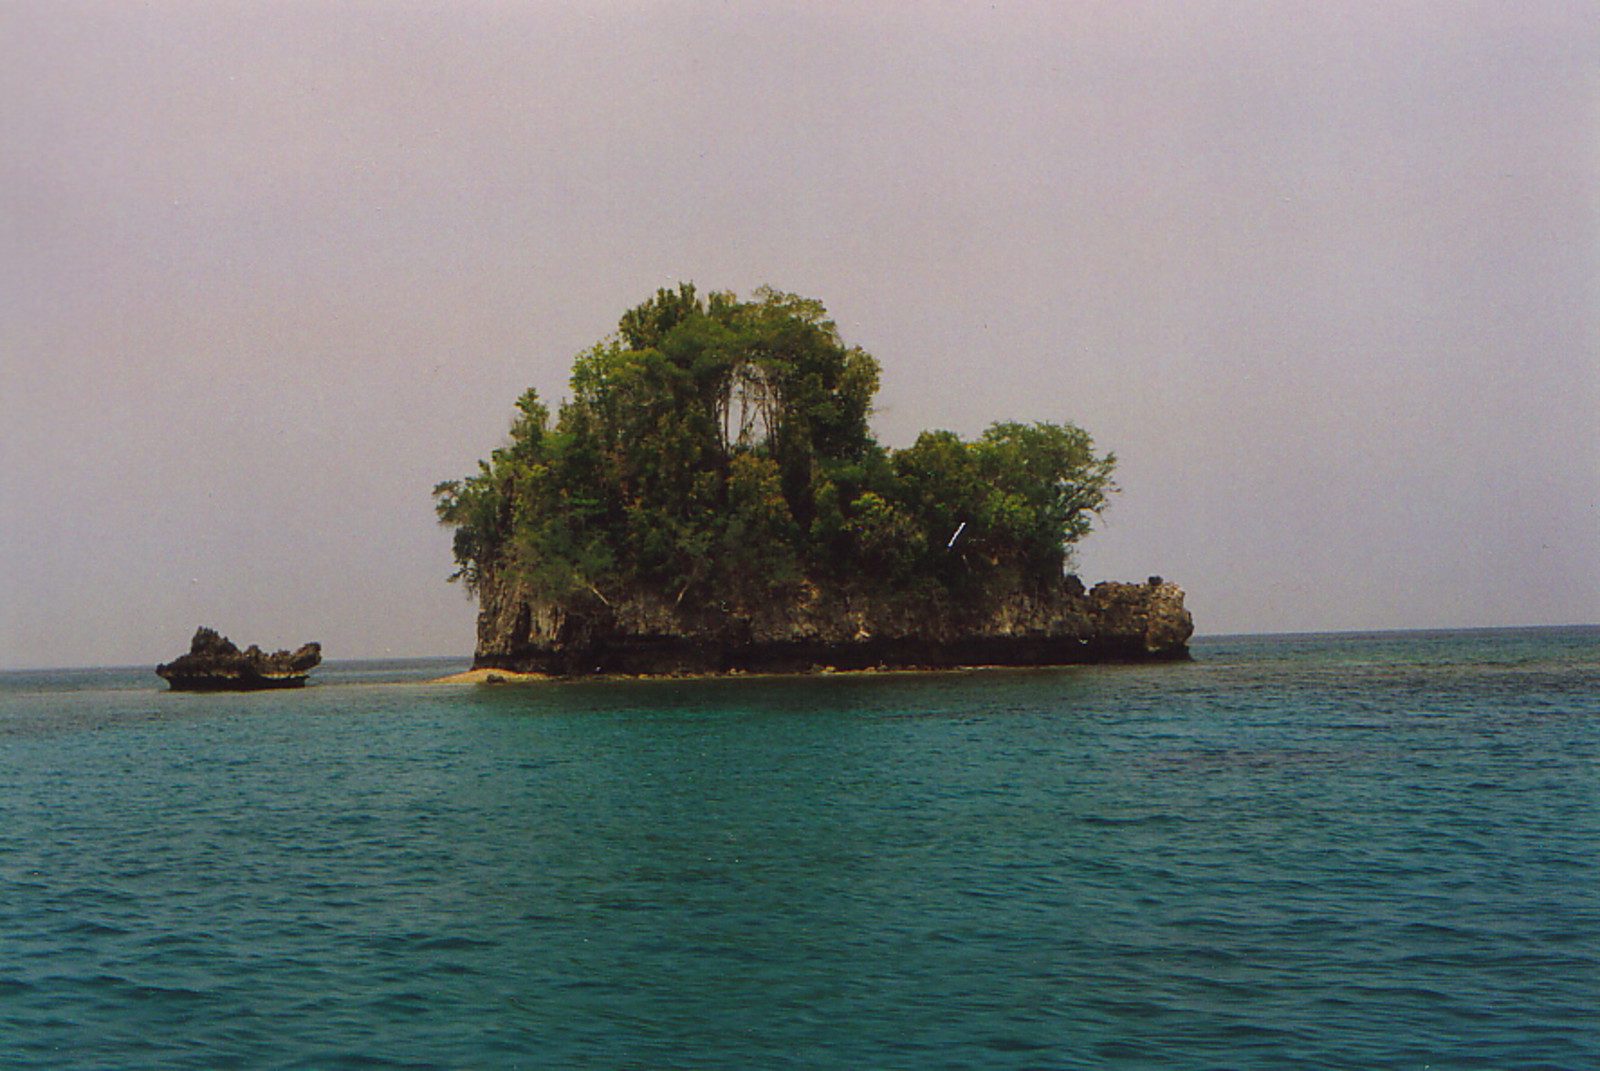 A small island